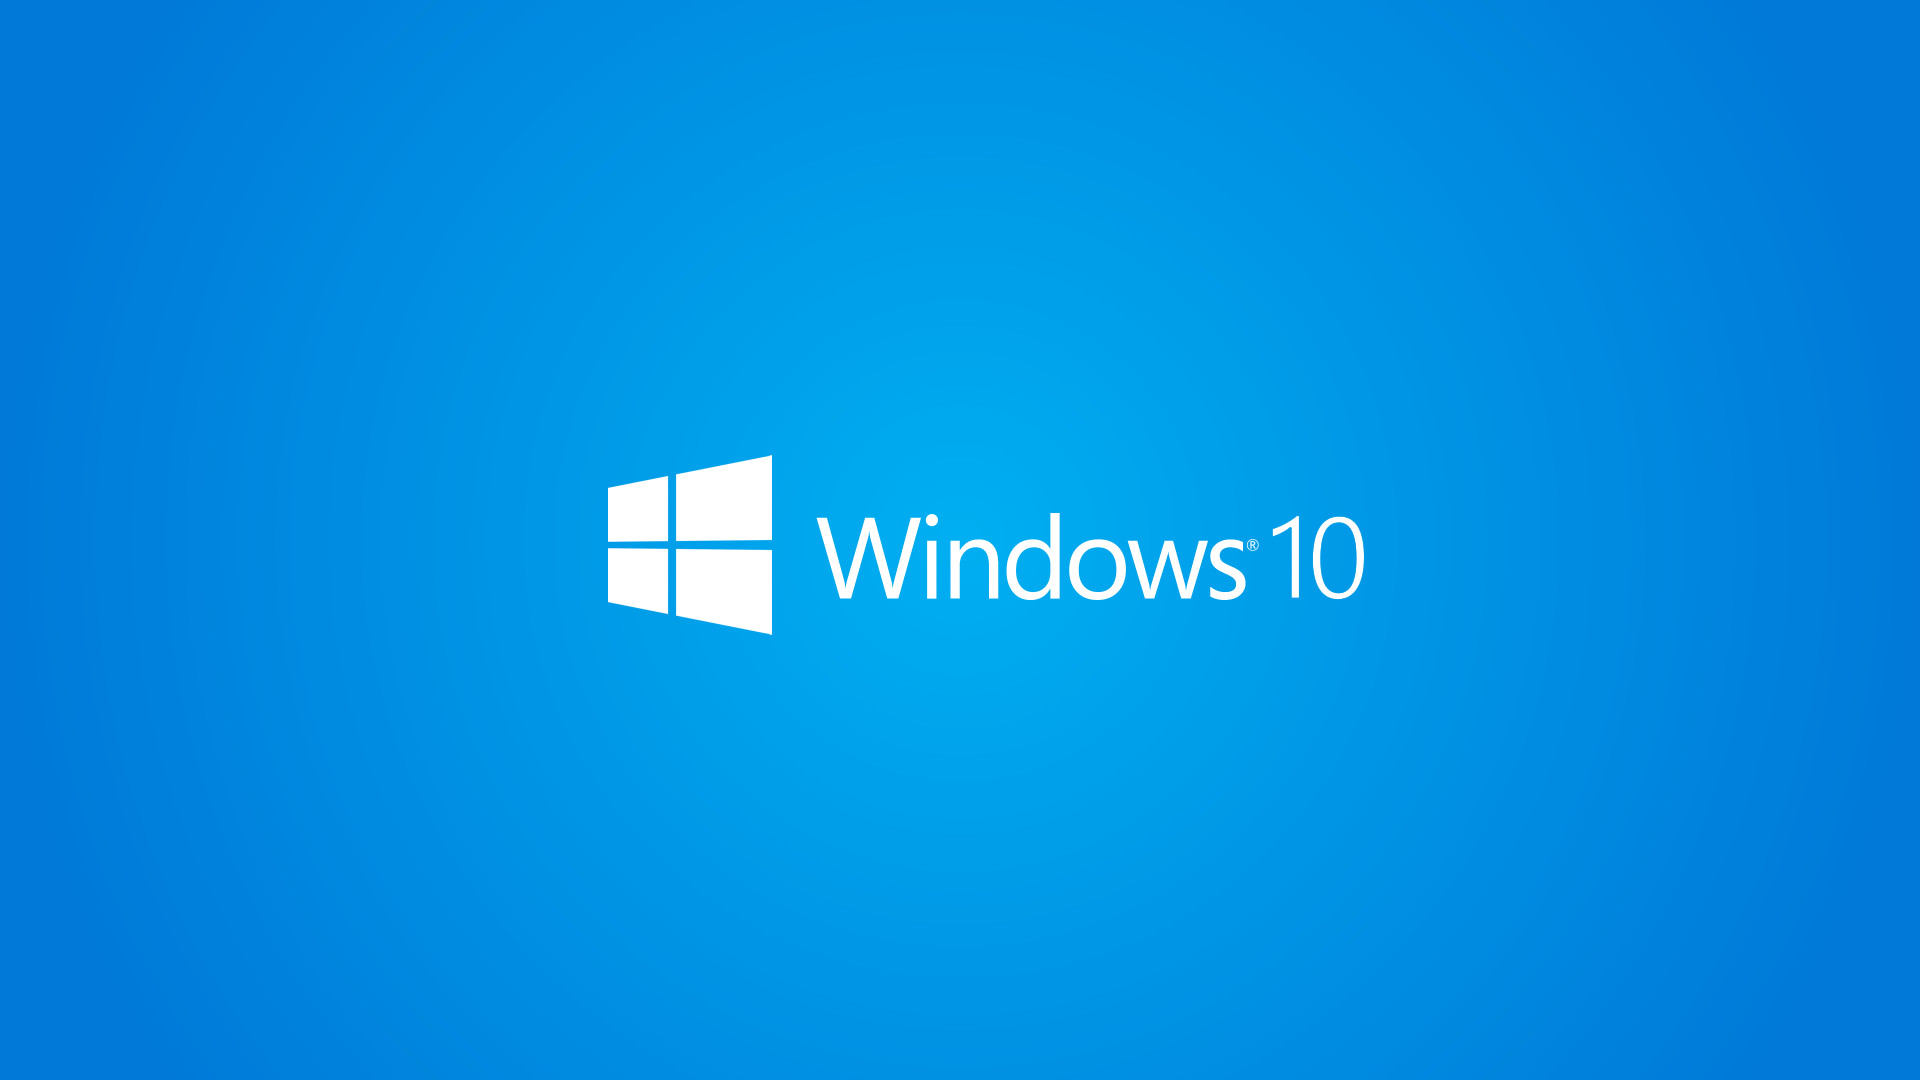 1920x1080 Windows 10 Wallpaper 1080p Full HD White Logo Blue Background